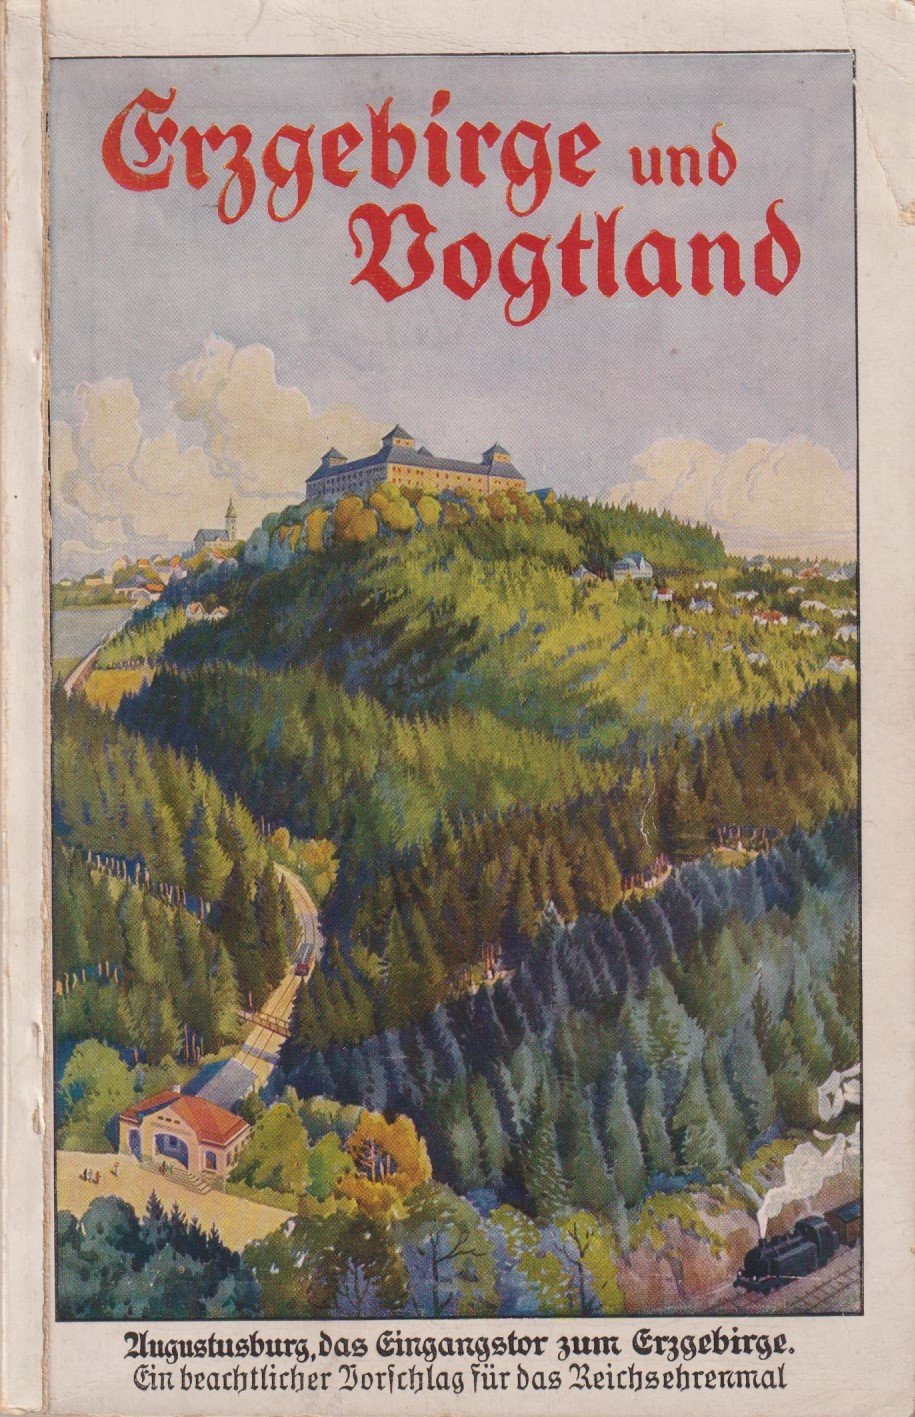 Erzgebirge und Vogtland (Archiv SAXONIA-FREIBERG-STIFTUNG CC BY-NC-SA)